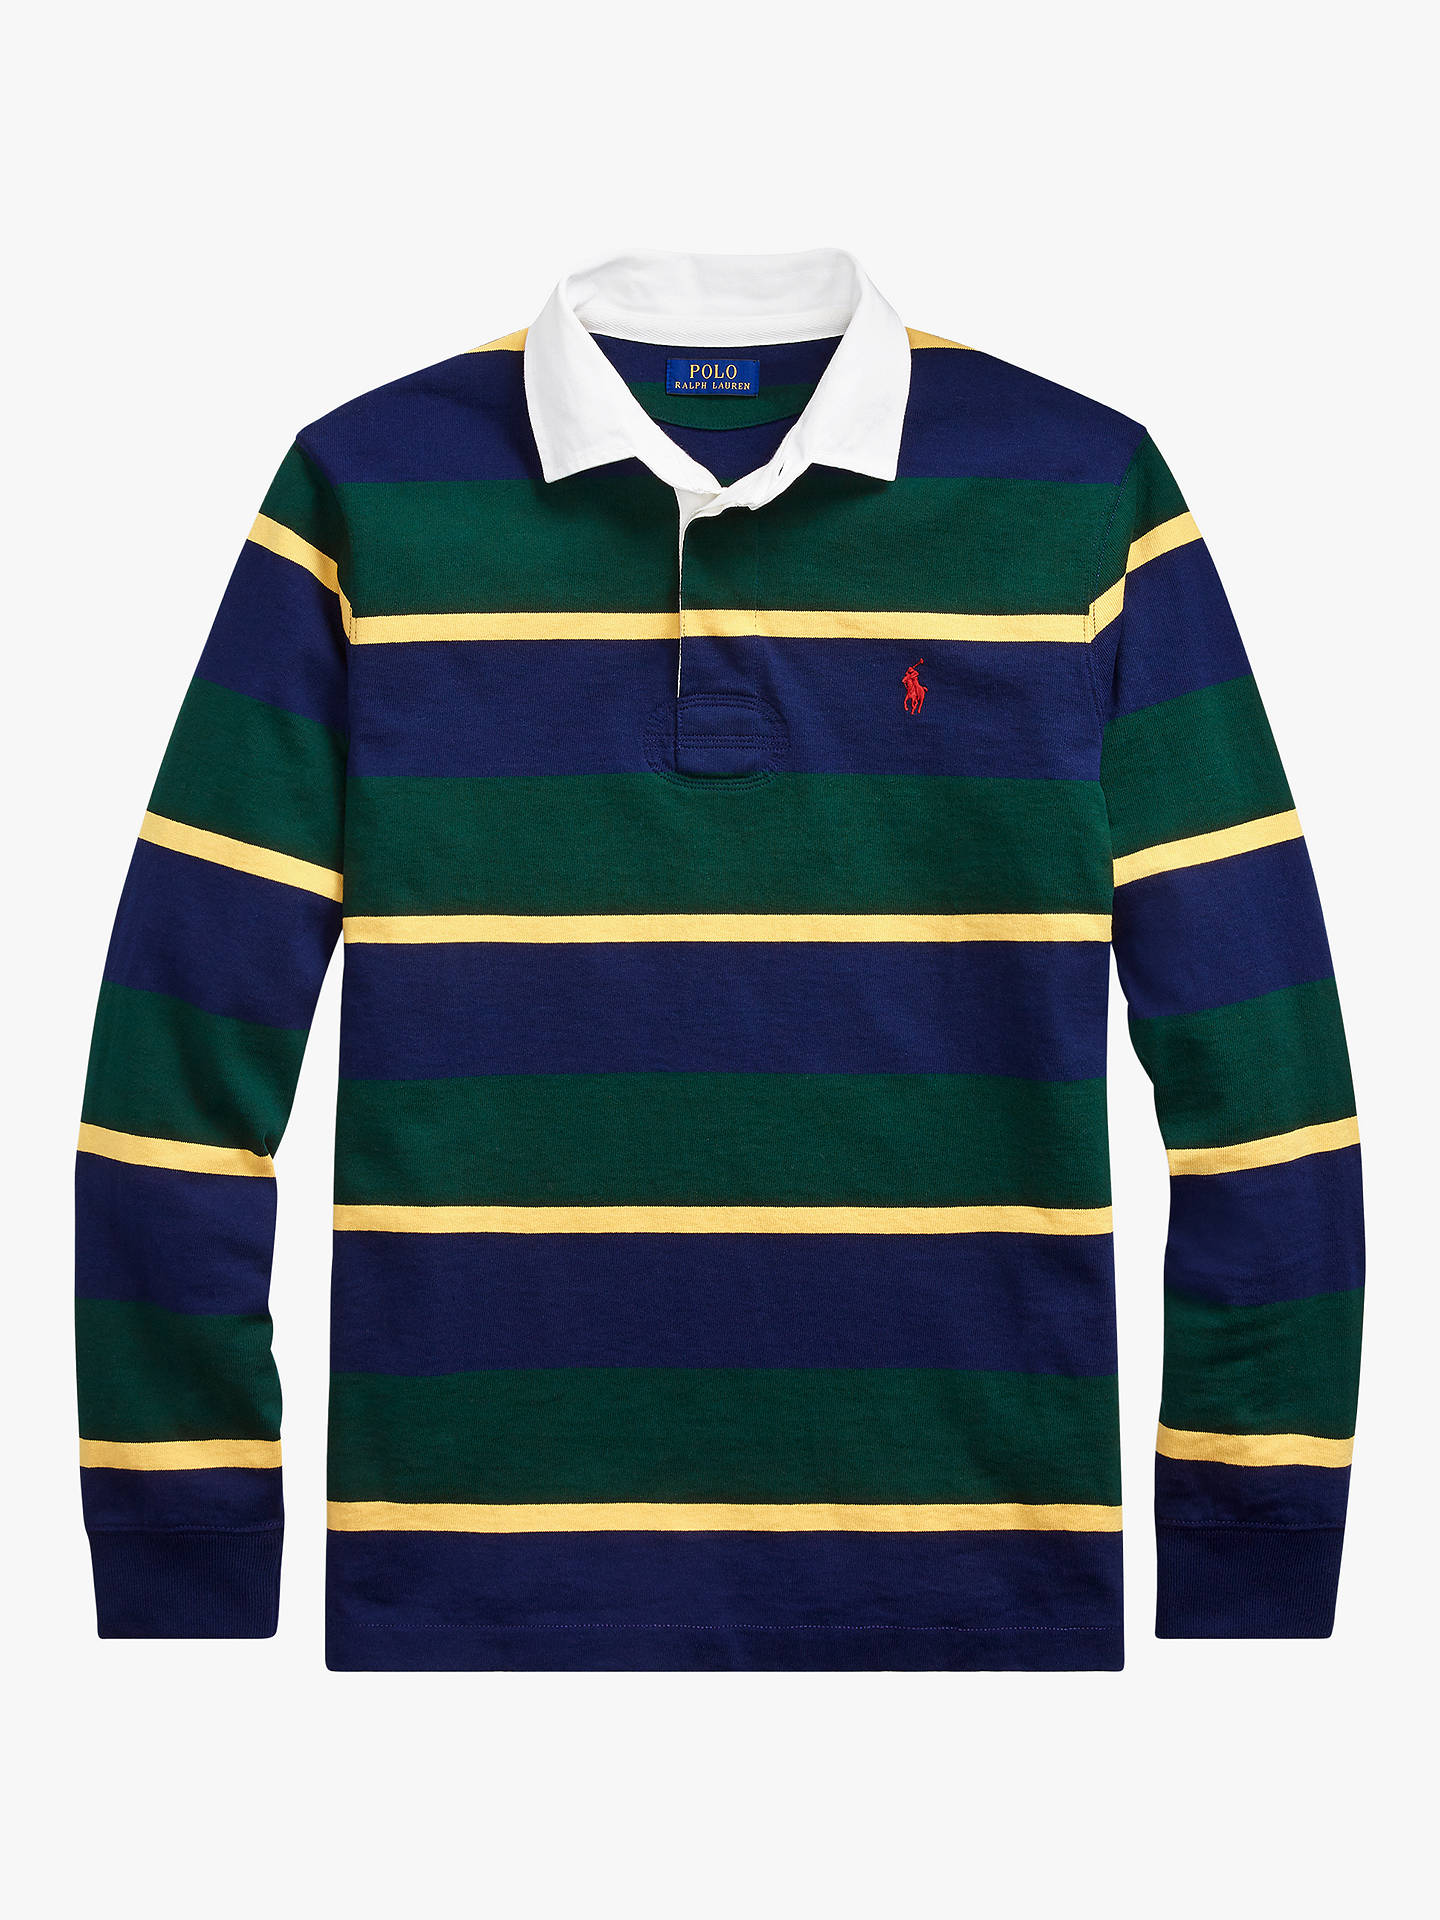 Polo Ralph Lauren Stripe Rugby Shirt, College Green Multi at John Lewis